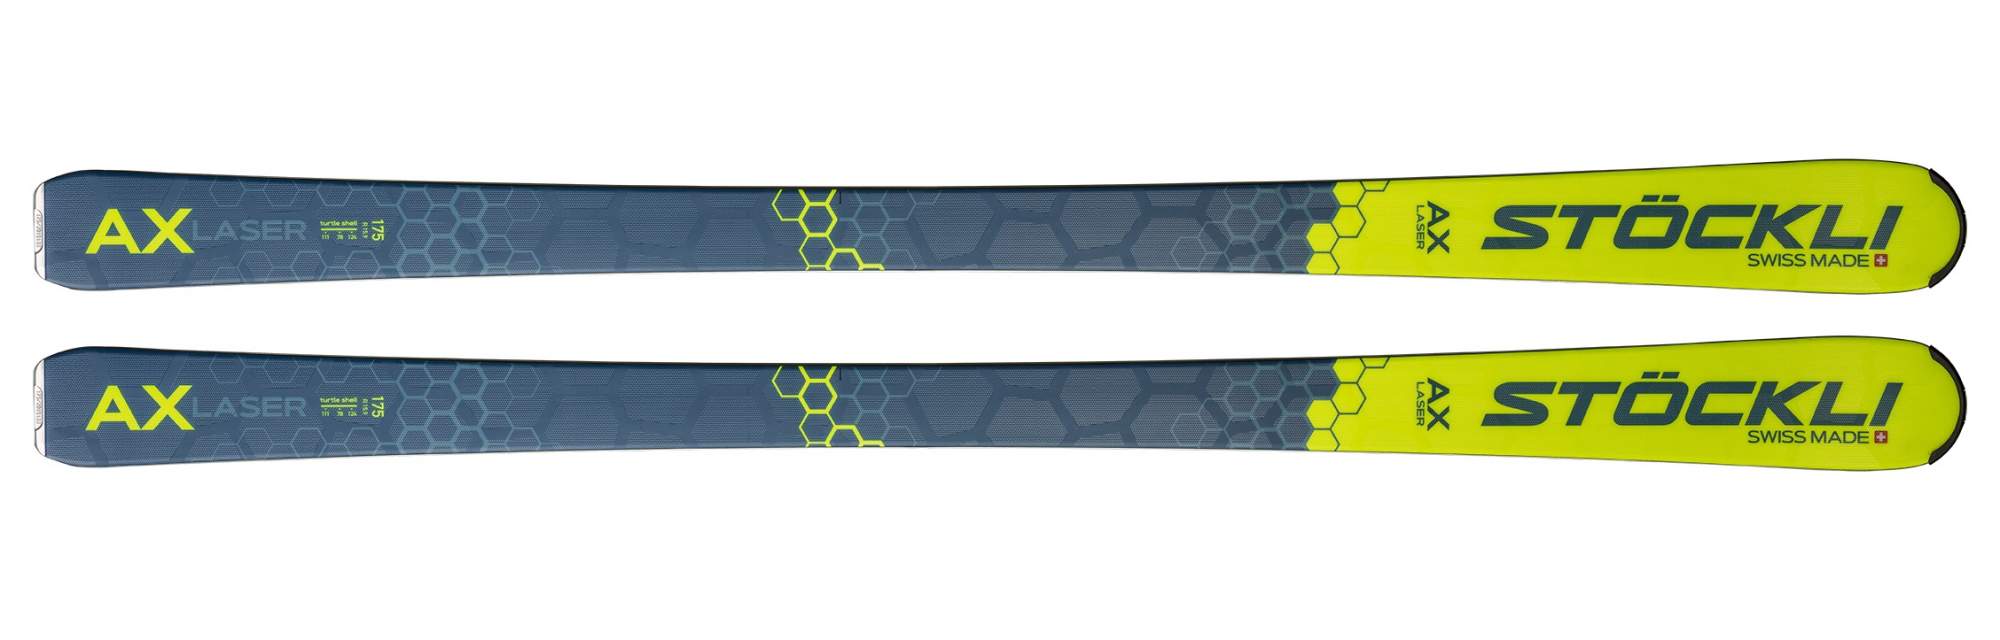 Горные лыжи Stockli Laser AX + Attack 13 AT 2022 blue/yellow, 161 см